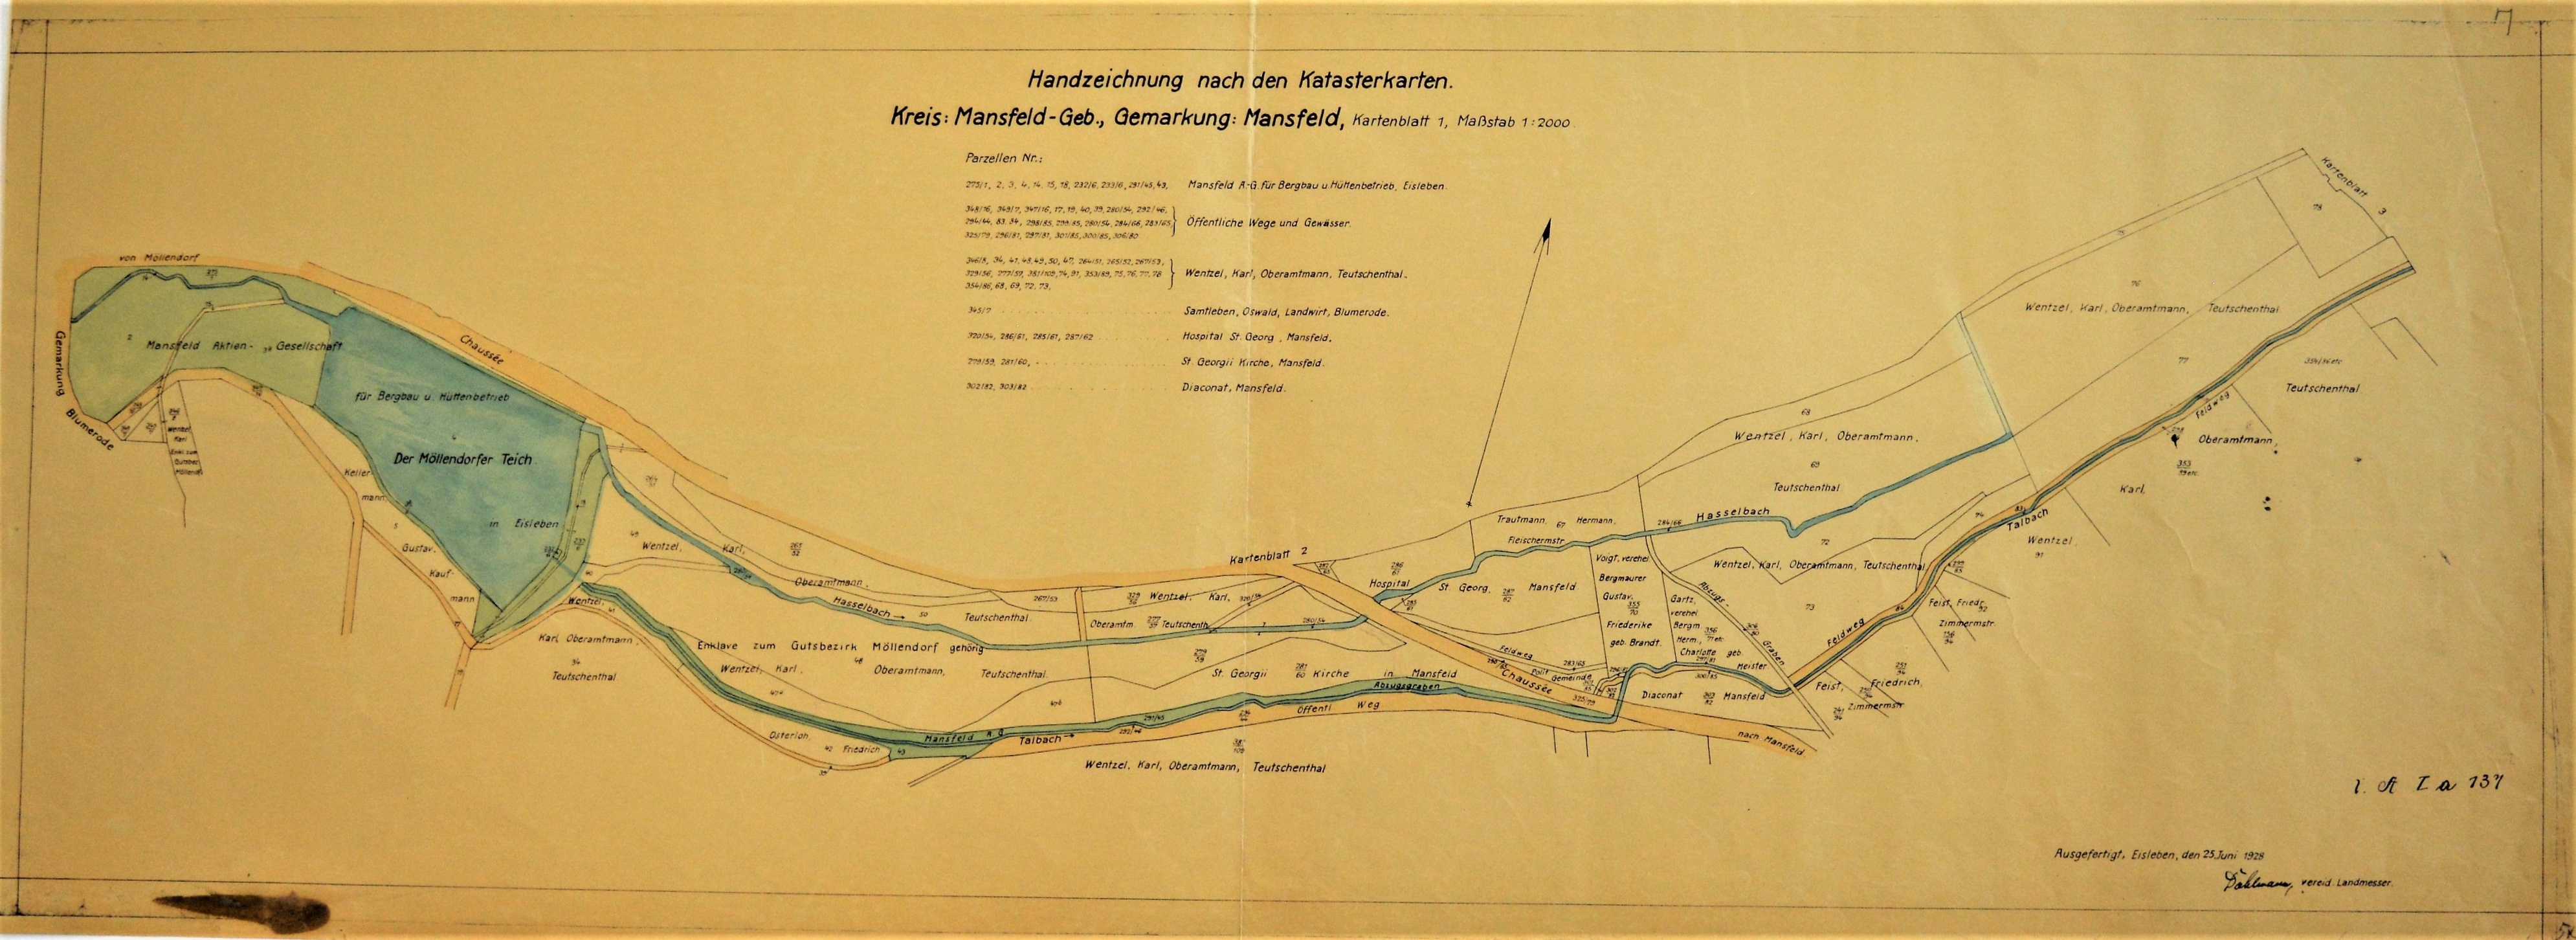 Handzeichnung nach den Katasterkarten Kreis: Mansfeld - Geb., Gemarkung Mansfeld, Kartenblatt 1. (Mansfeld-Museum im Humboldt-Schloss CC BY-NC-SA)